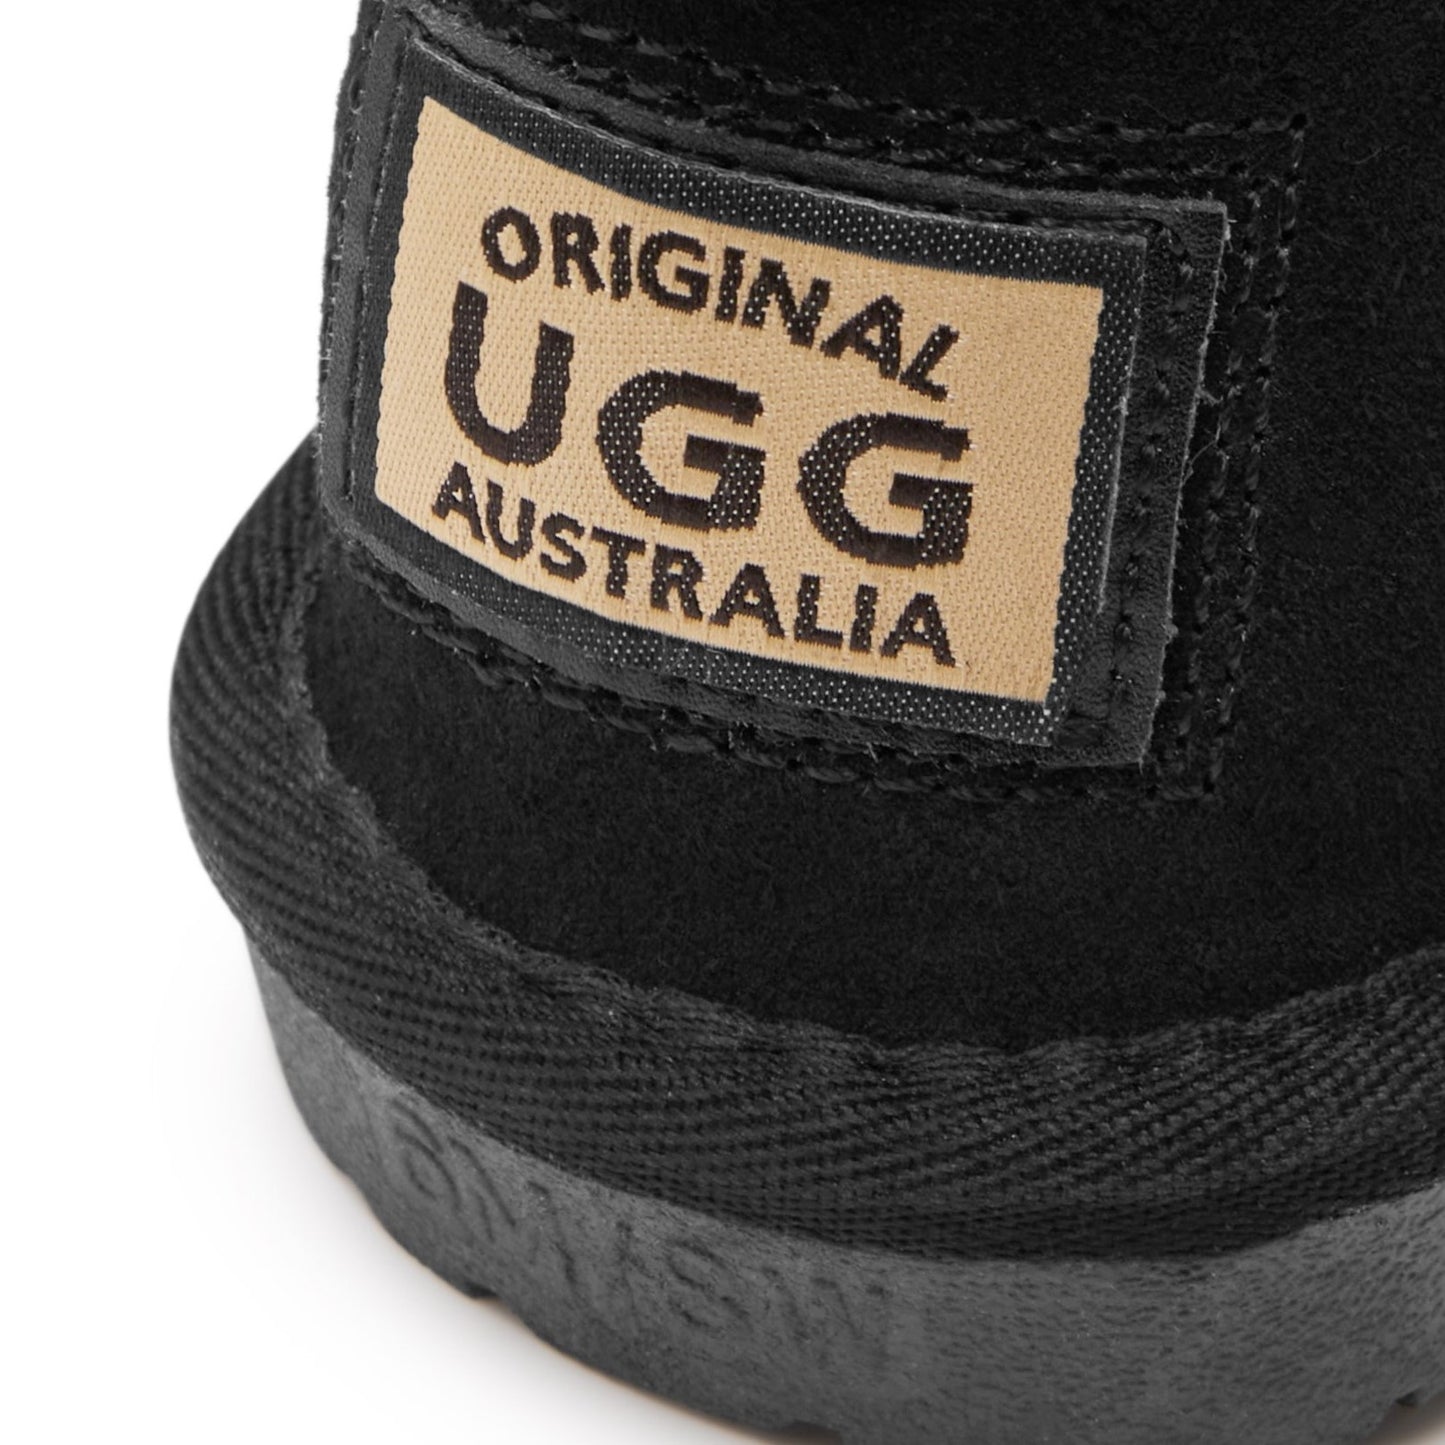 Originals Ugg Australia Strap Up Long Boot Black